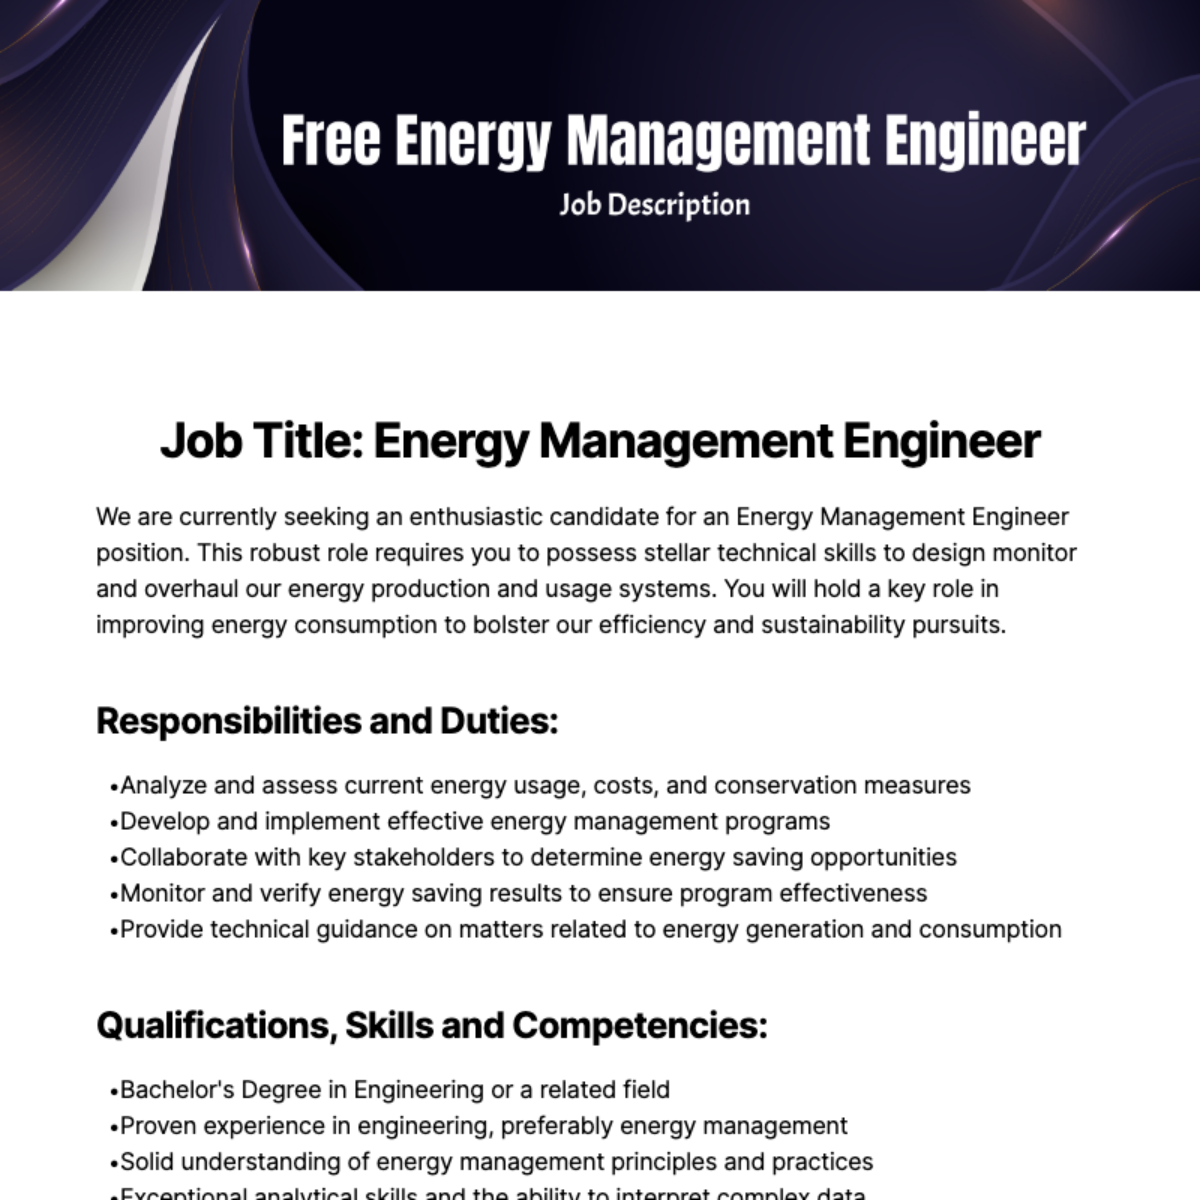 Free Energy Management Engineer Job Description Template